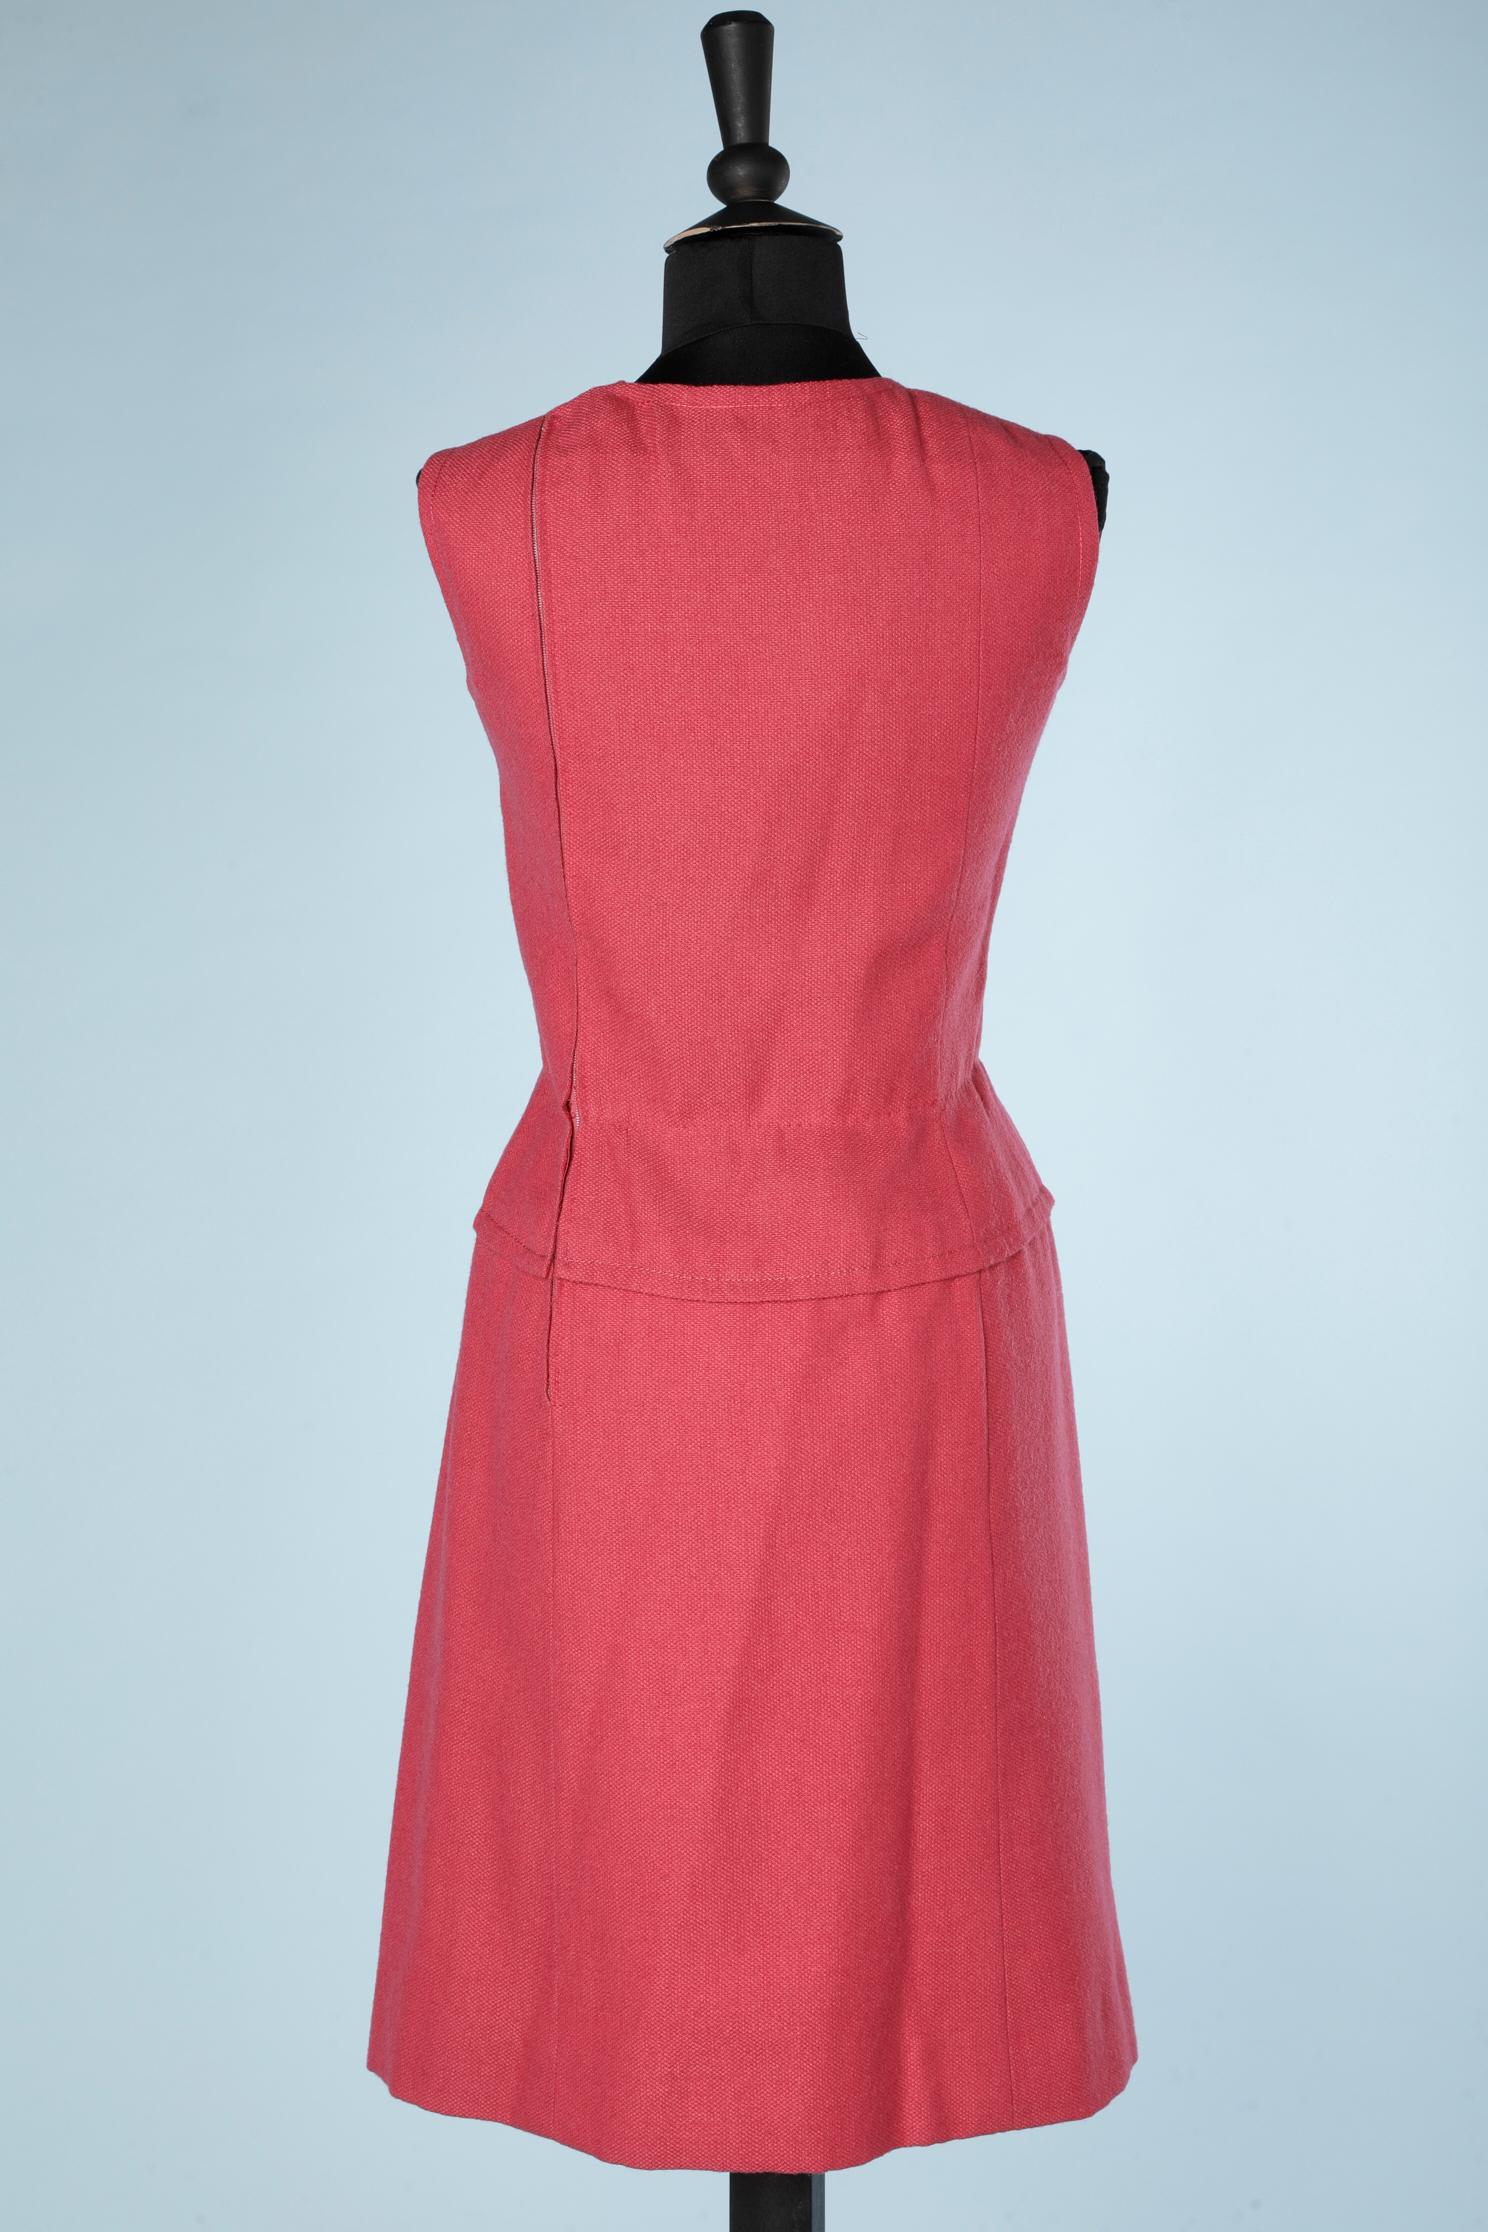 Women's Sleeveless pink wool cocktail dress Guy Laroche Circa 1960's  For Sale